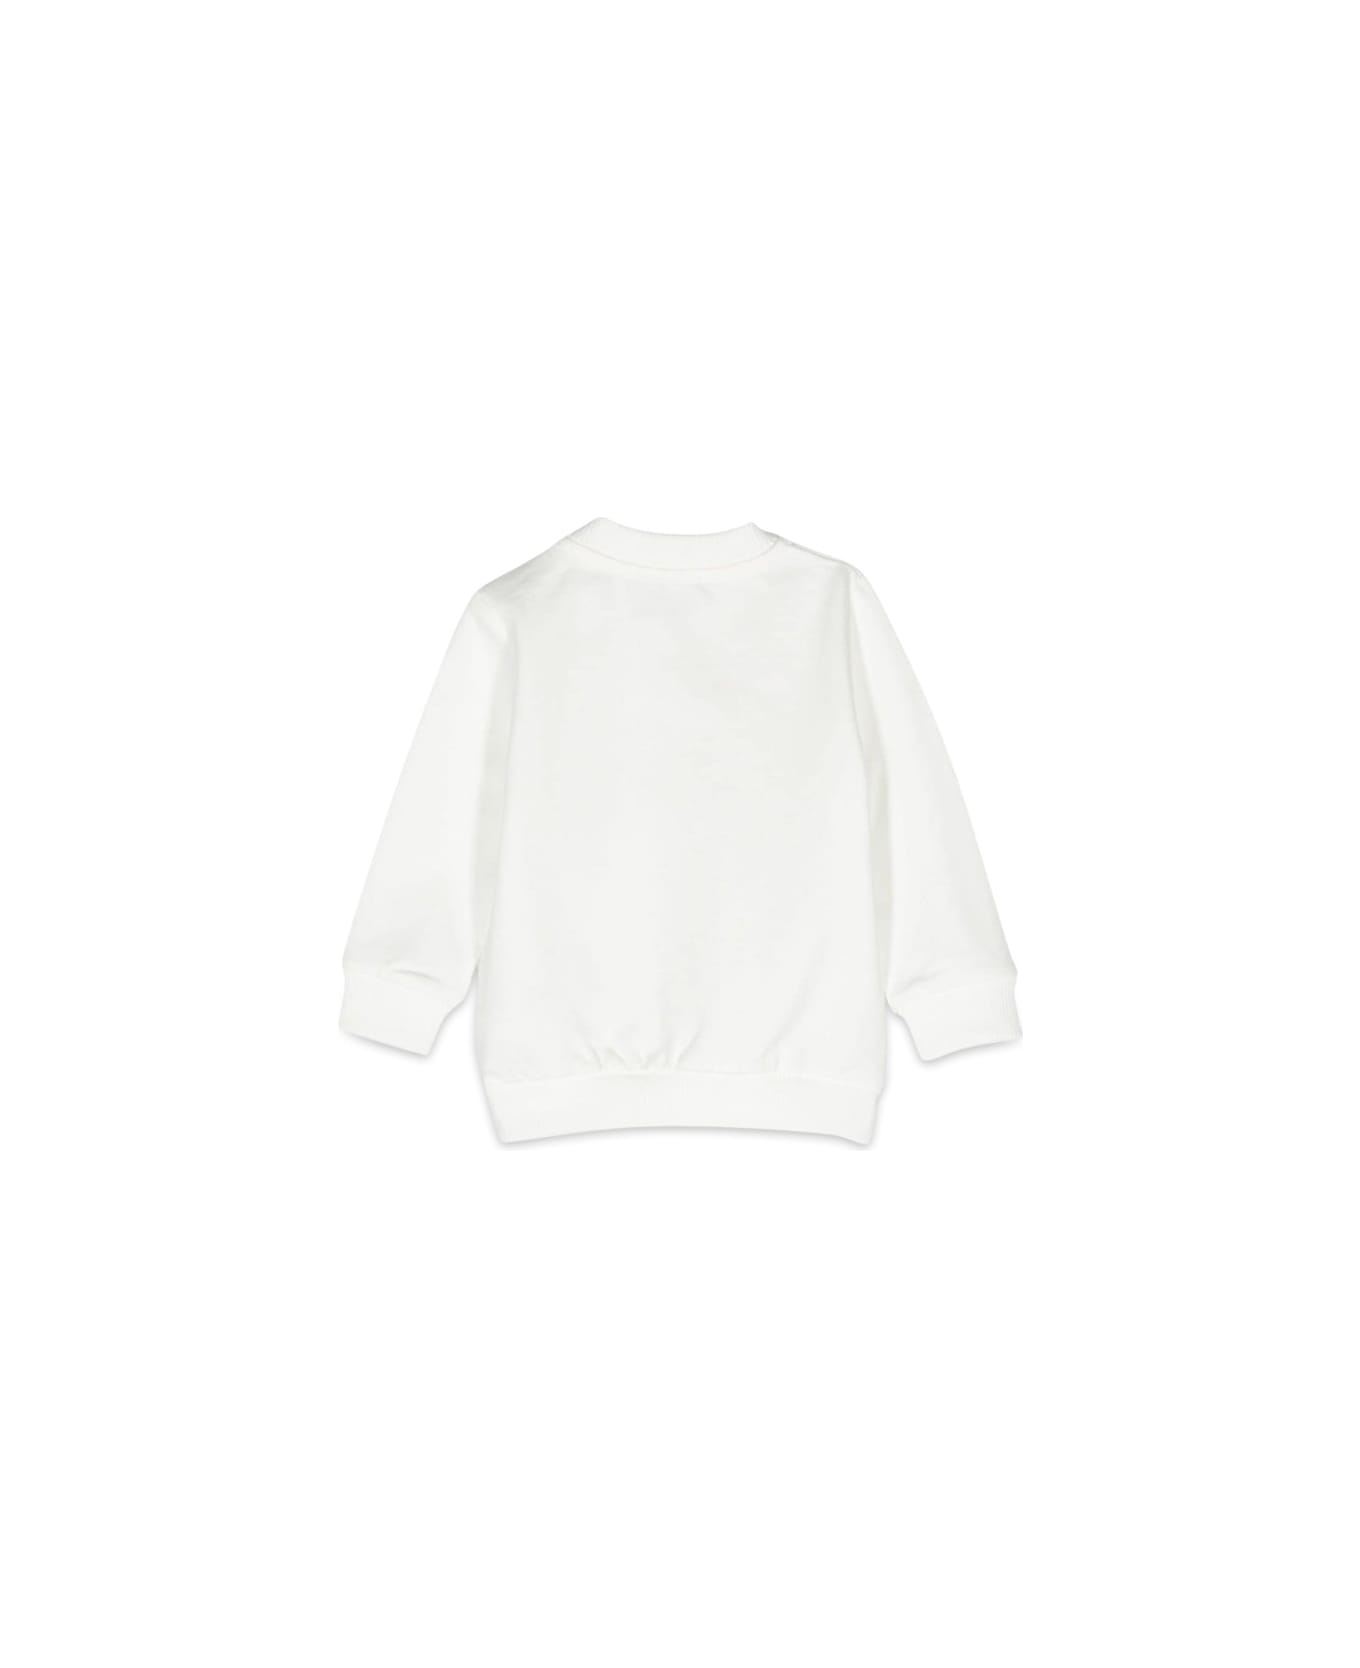 Moschino Teddy Bear Crewneck Sweatshirt - WHITE